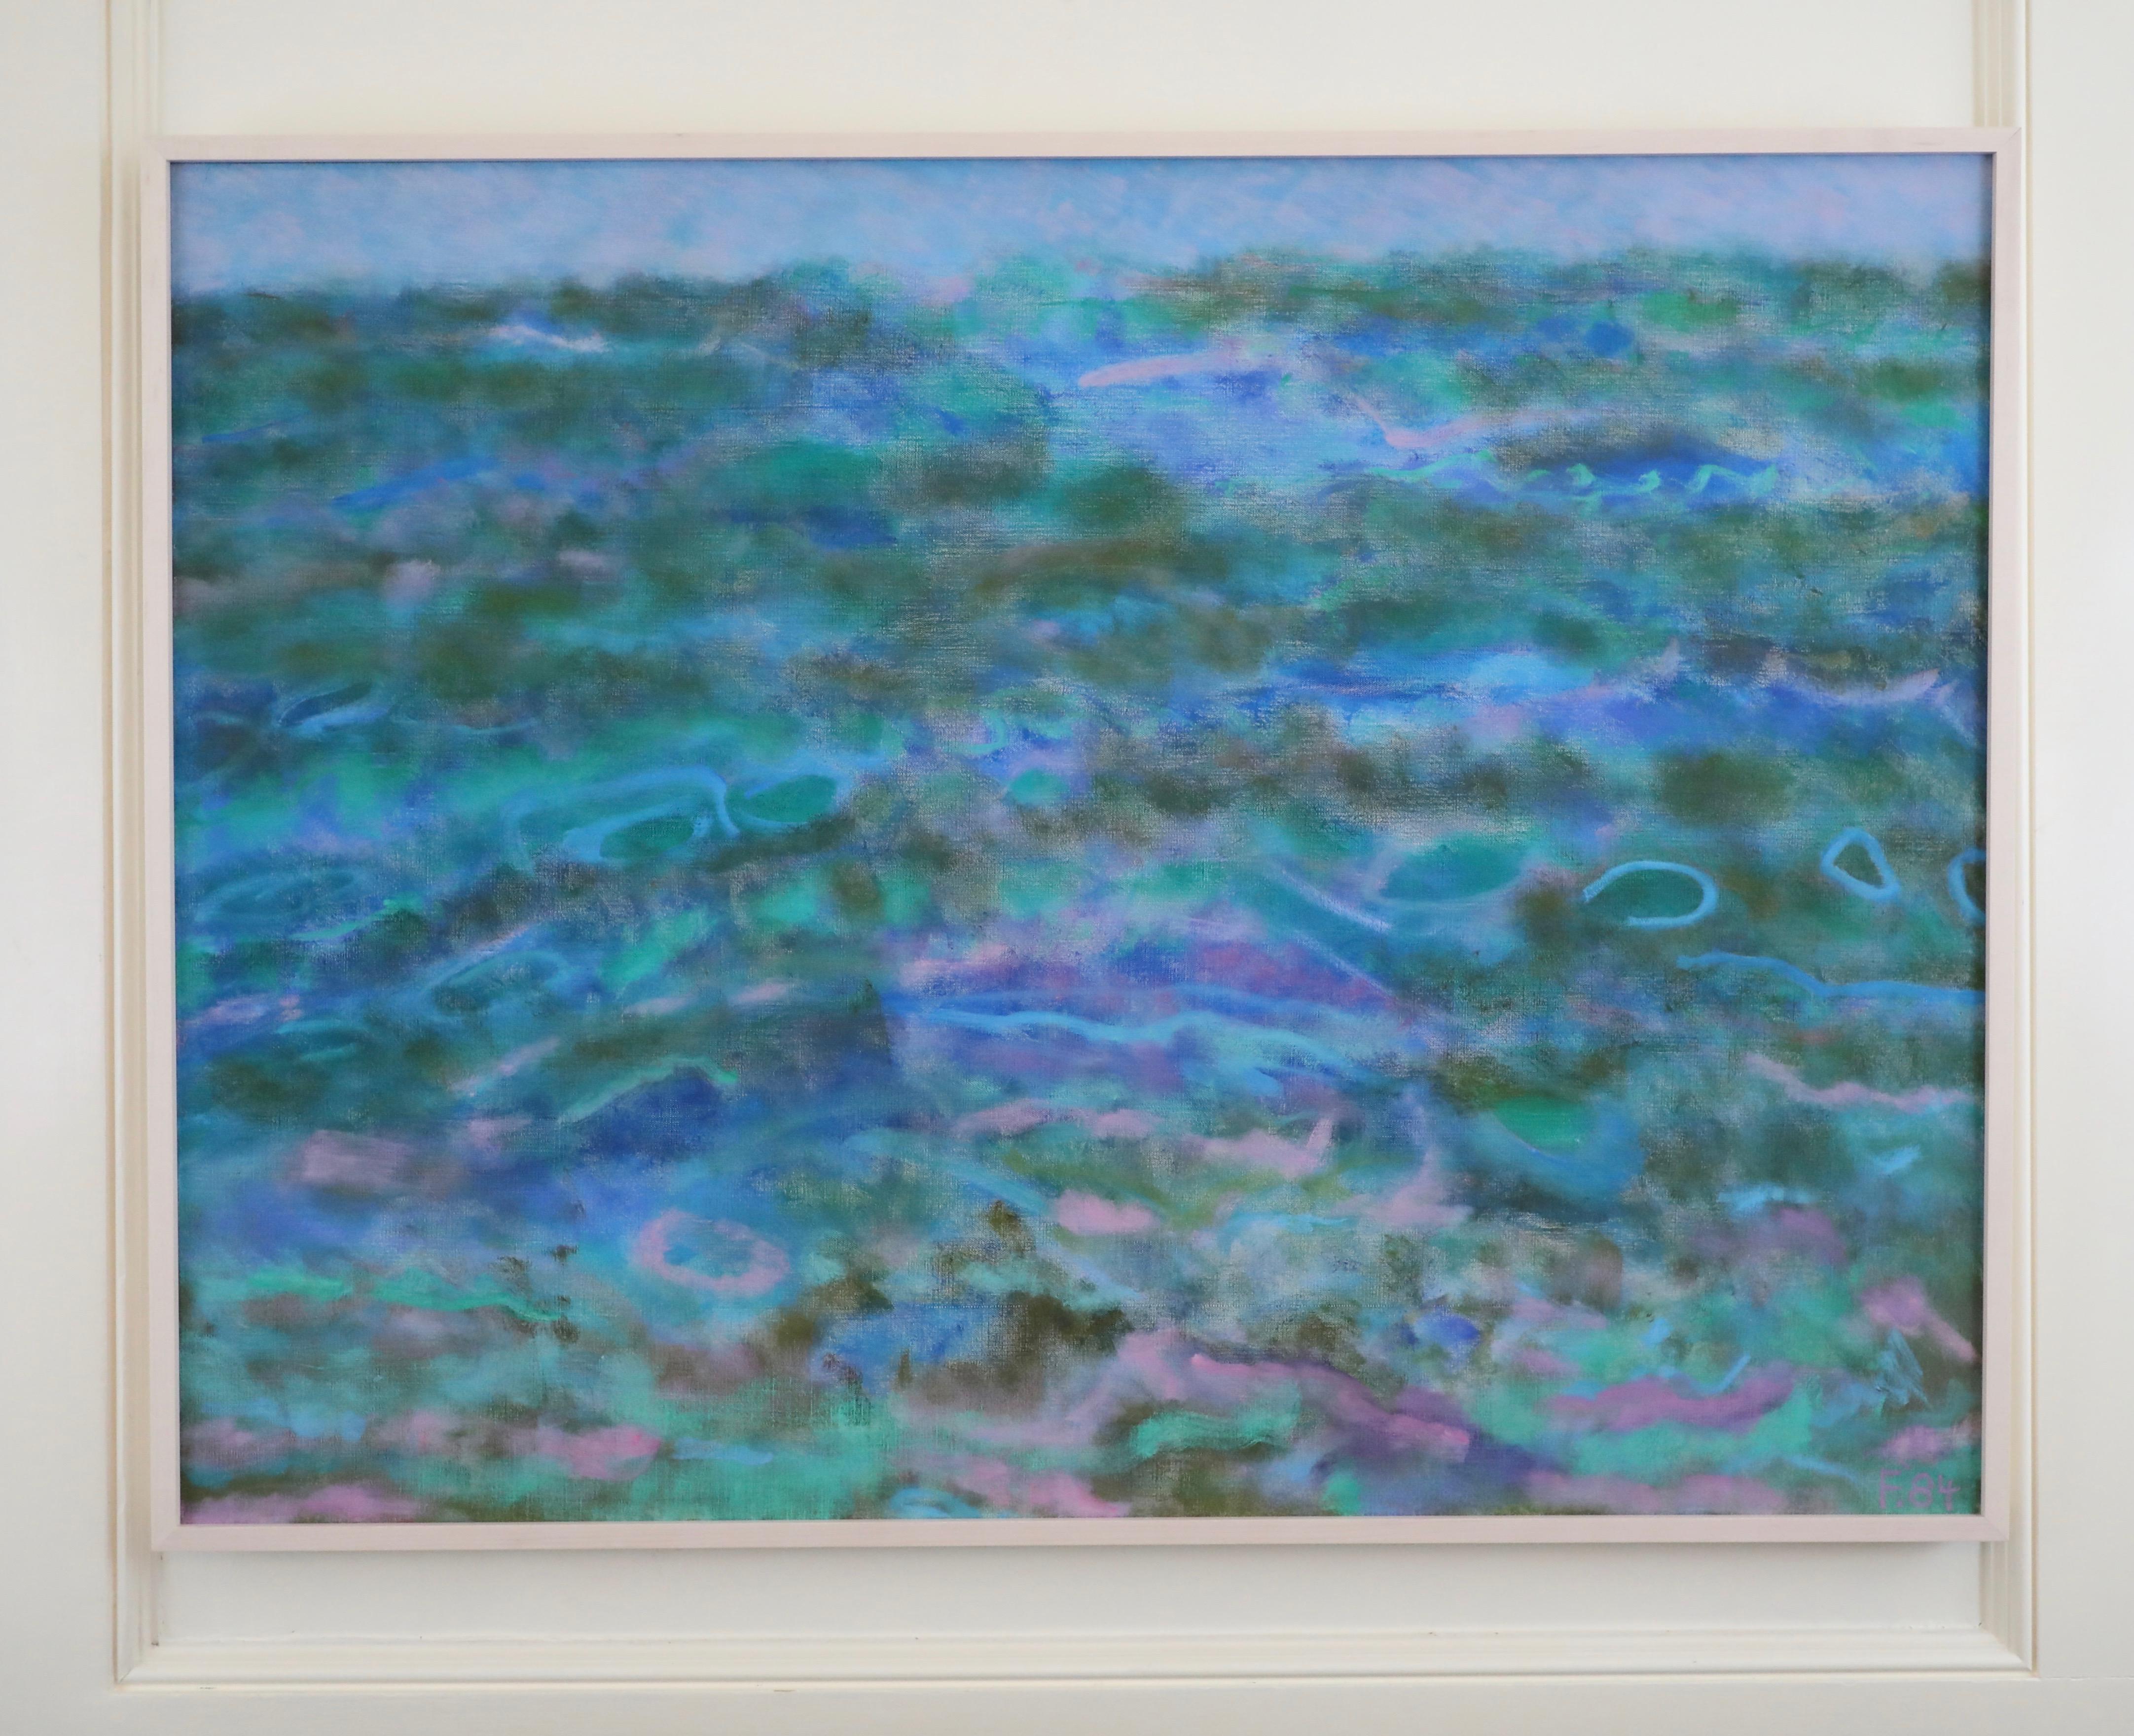 Elaine Kaufman Feiner Abstract Painting - Abstract Oil on Canvas, "Towards the Shore" (Florida Keys)